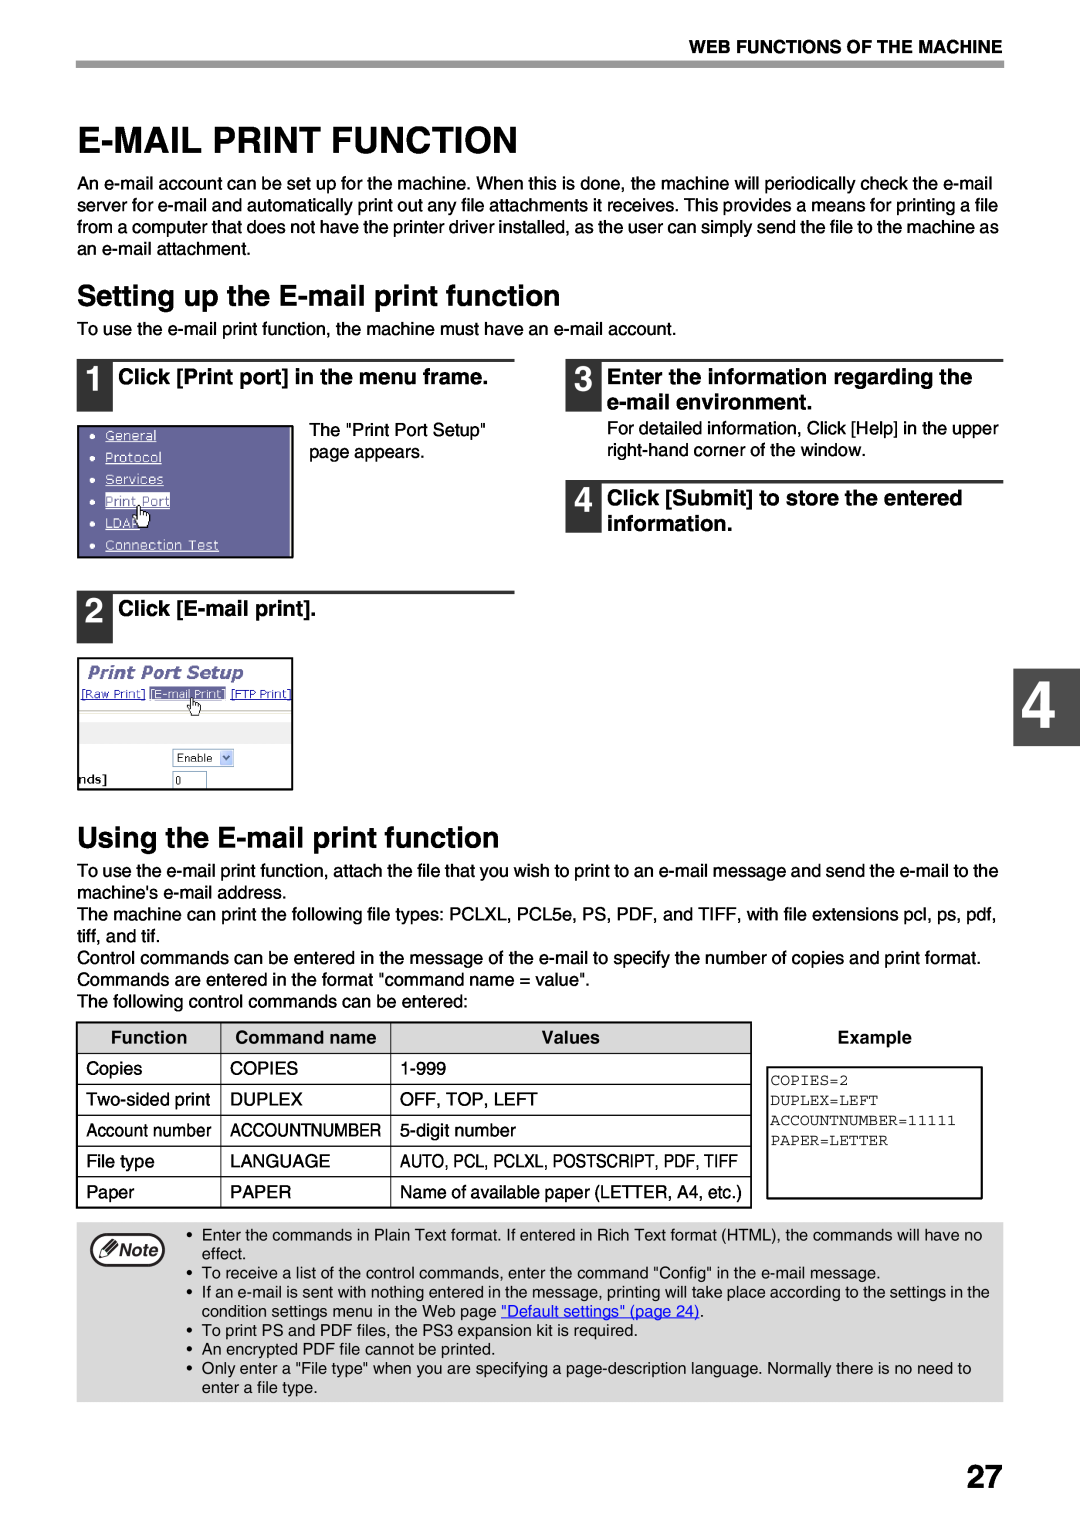 Sharp AR-NB3 operation manual E-Mail Print Function, Setting up the E-mail print function, Using the E-mail print function 